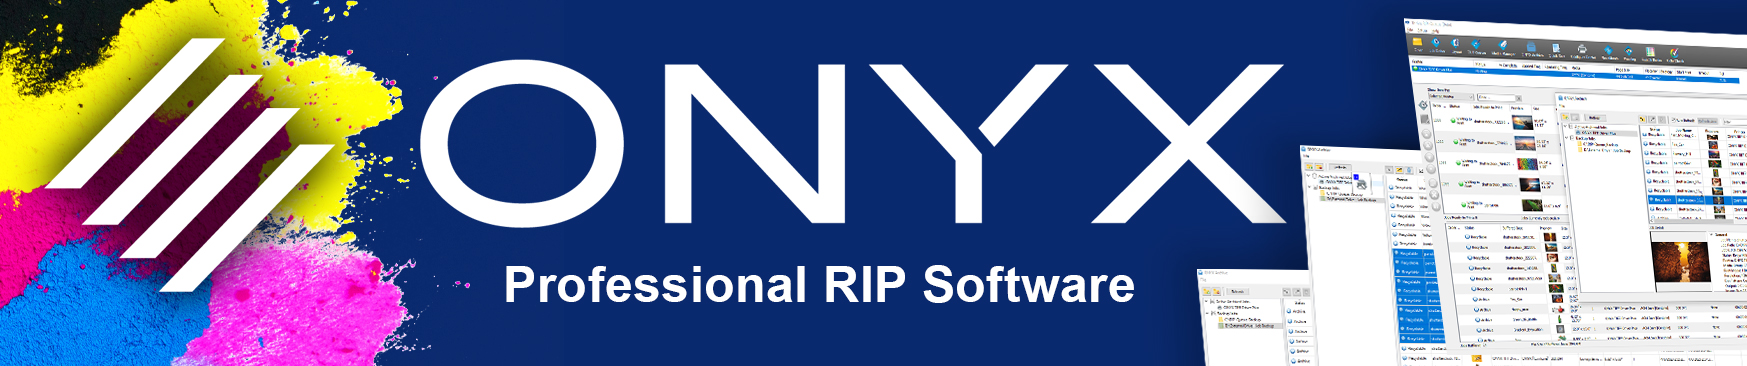 Buy Onyx RIP Software from ProDigitalGear.com!